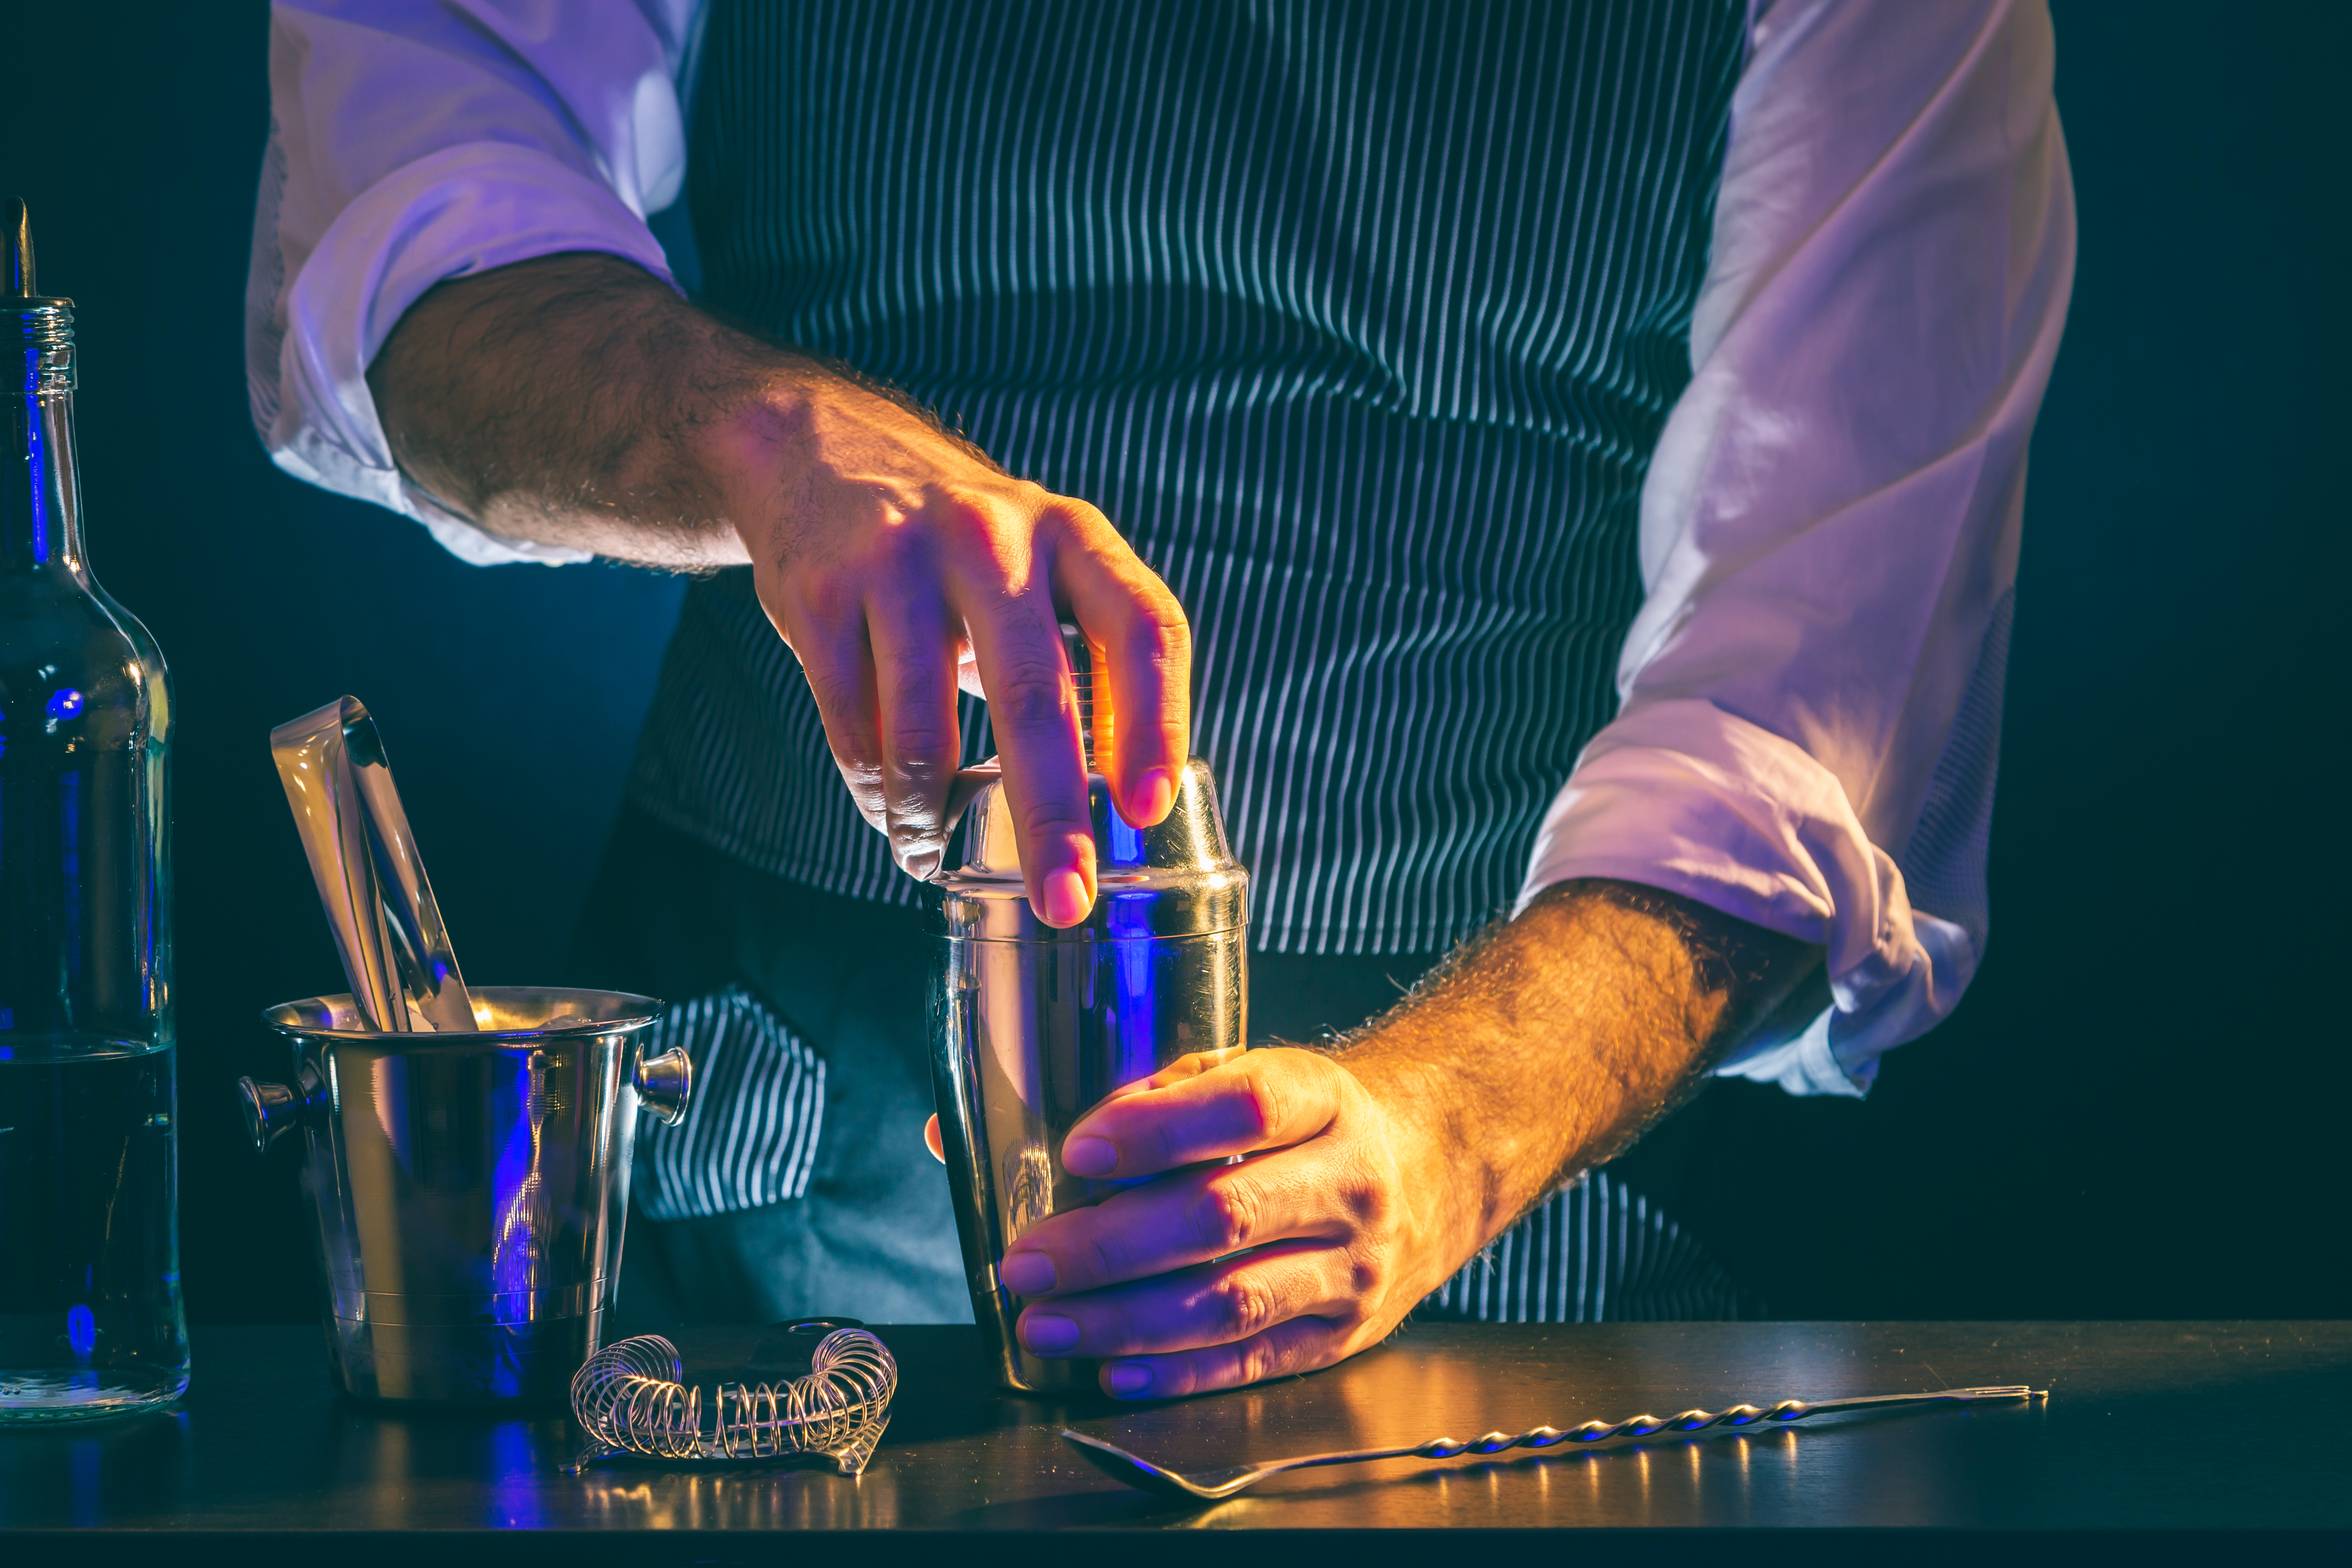 A bartender opening a cocktail shaker | Source: Shutterstock